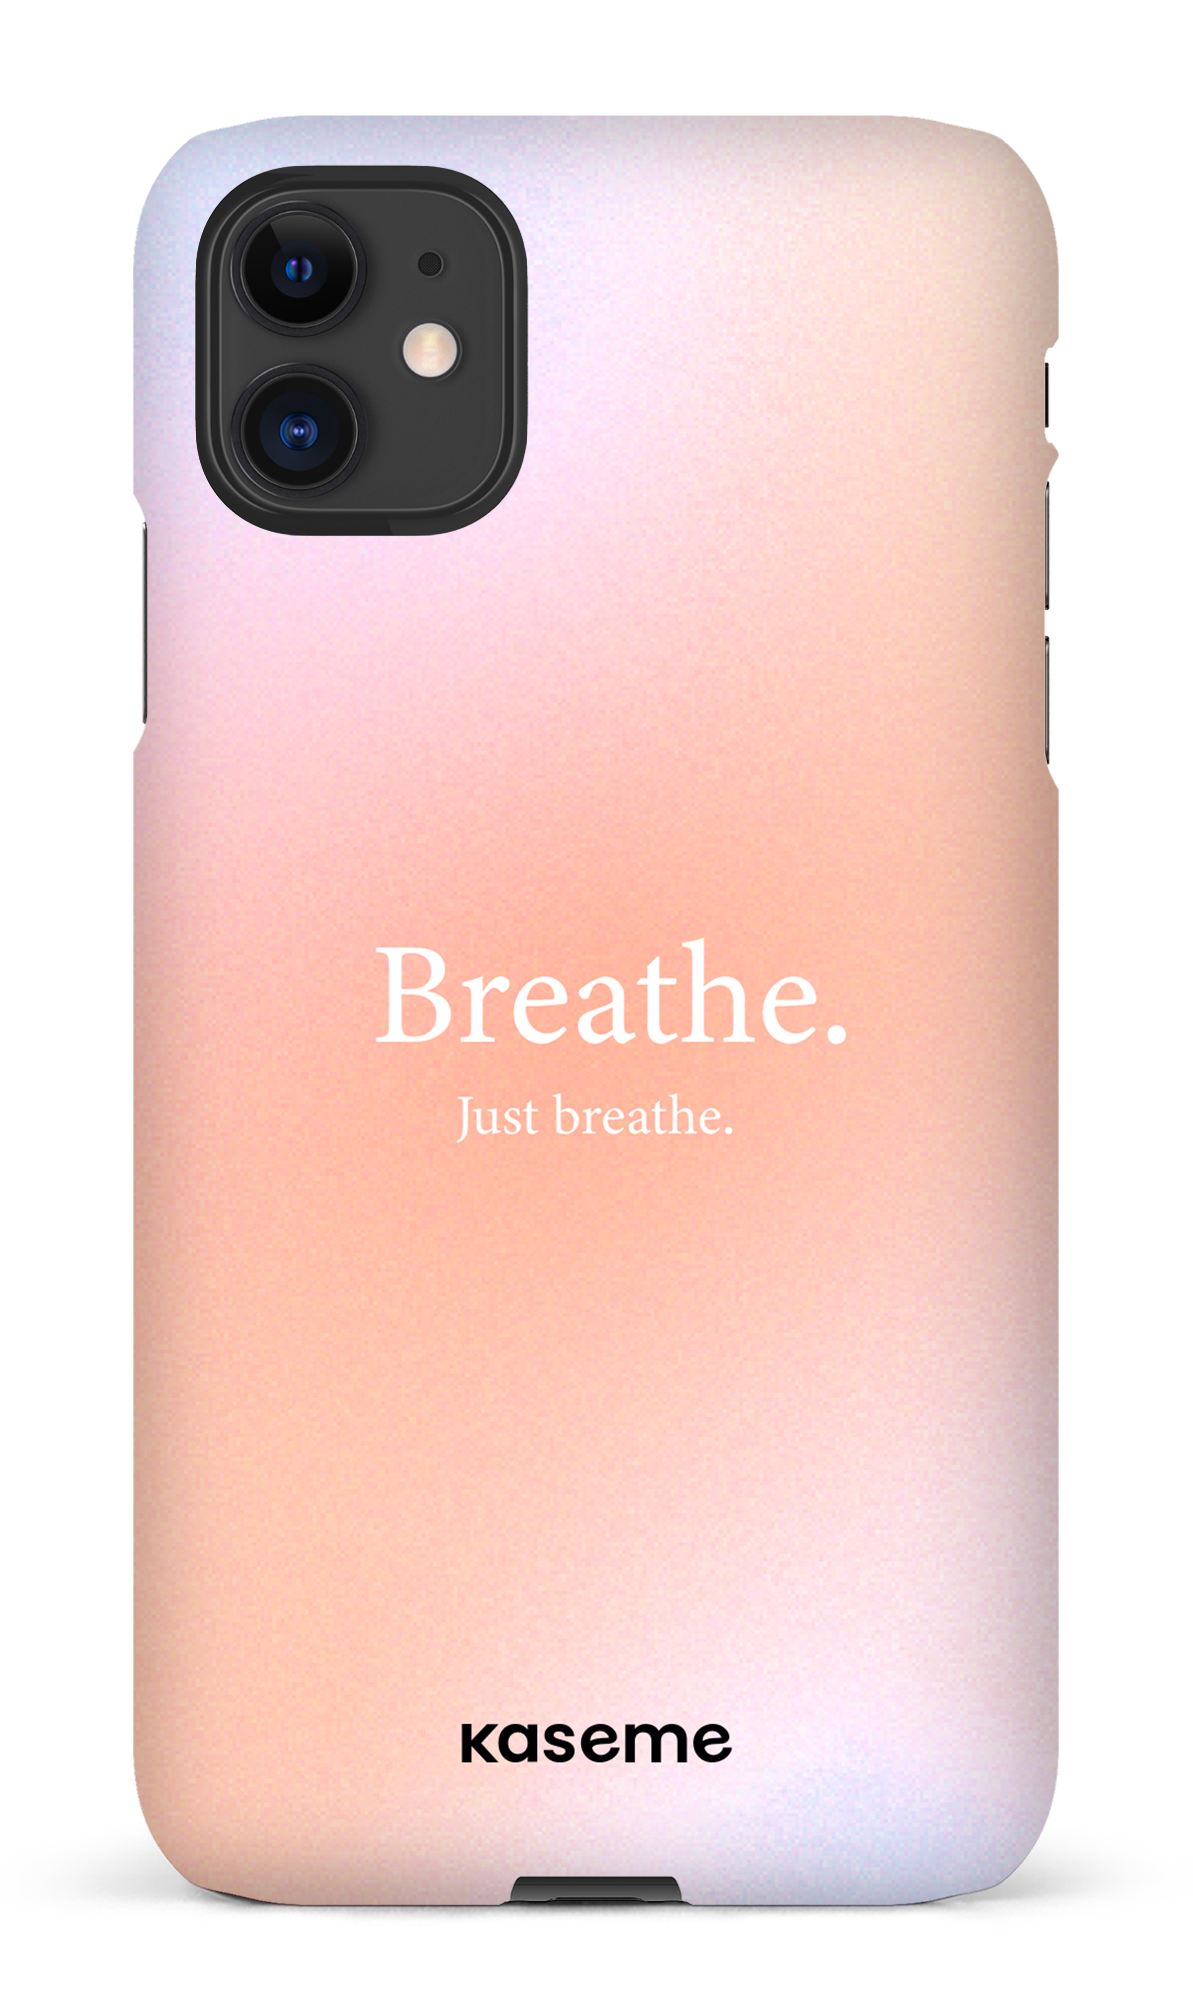 Just breathe - iPhone 11